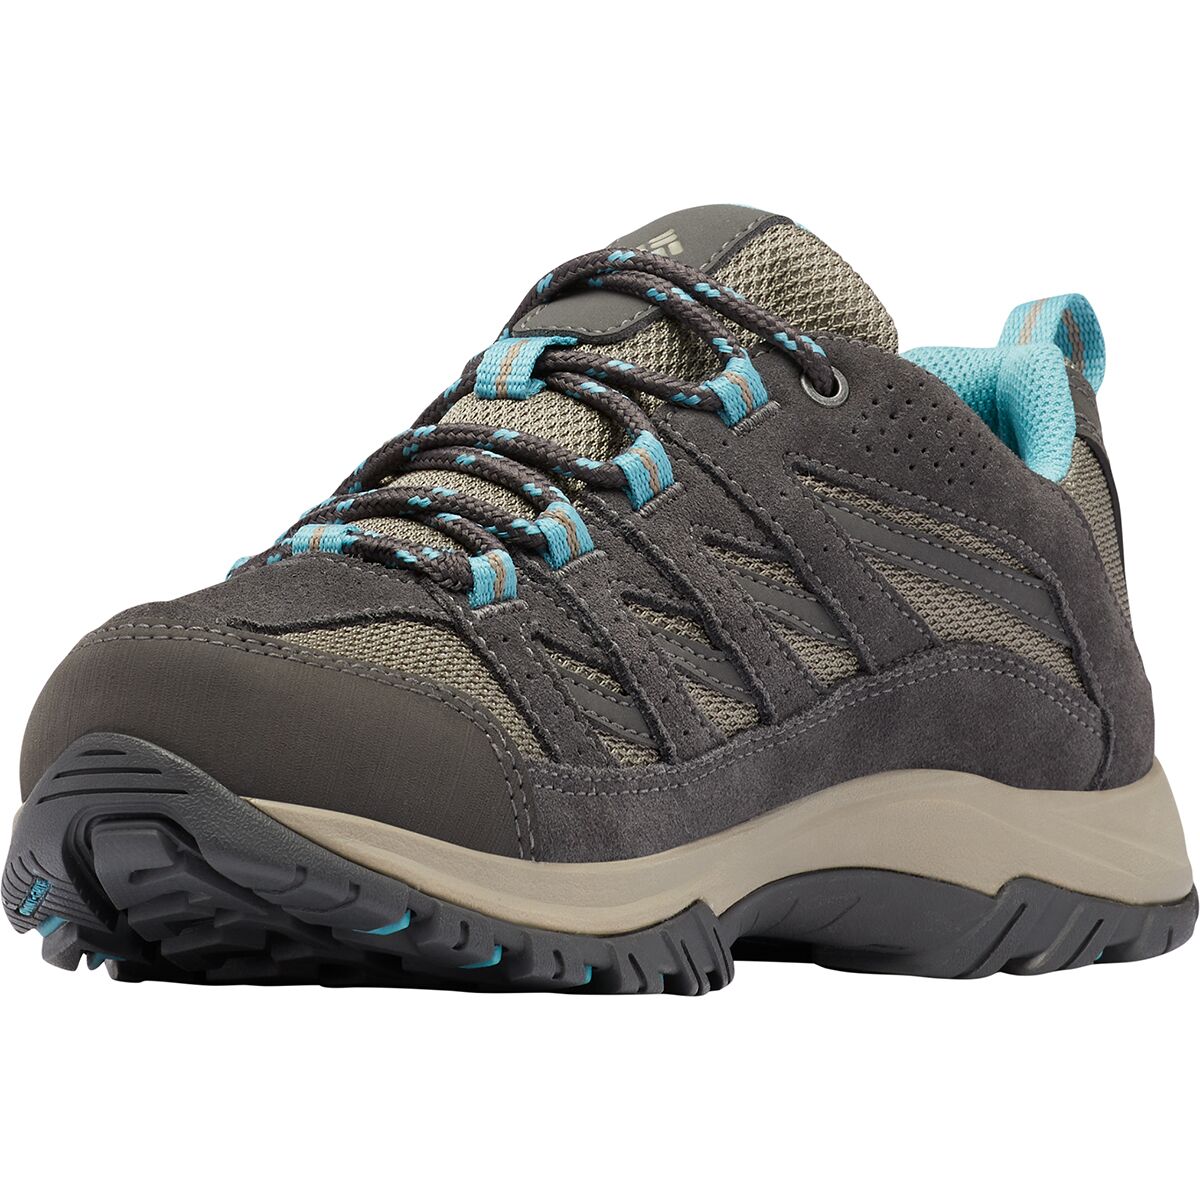 Columbia Crestwood Waterproof Hiking Shoe - Women's - Footwear